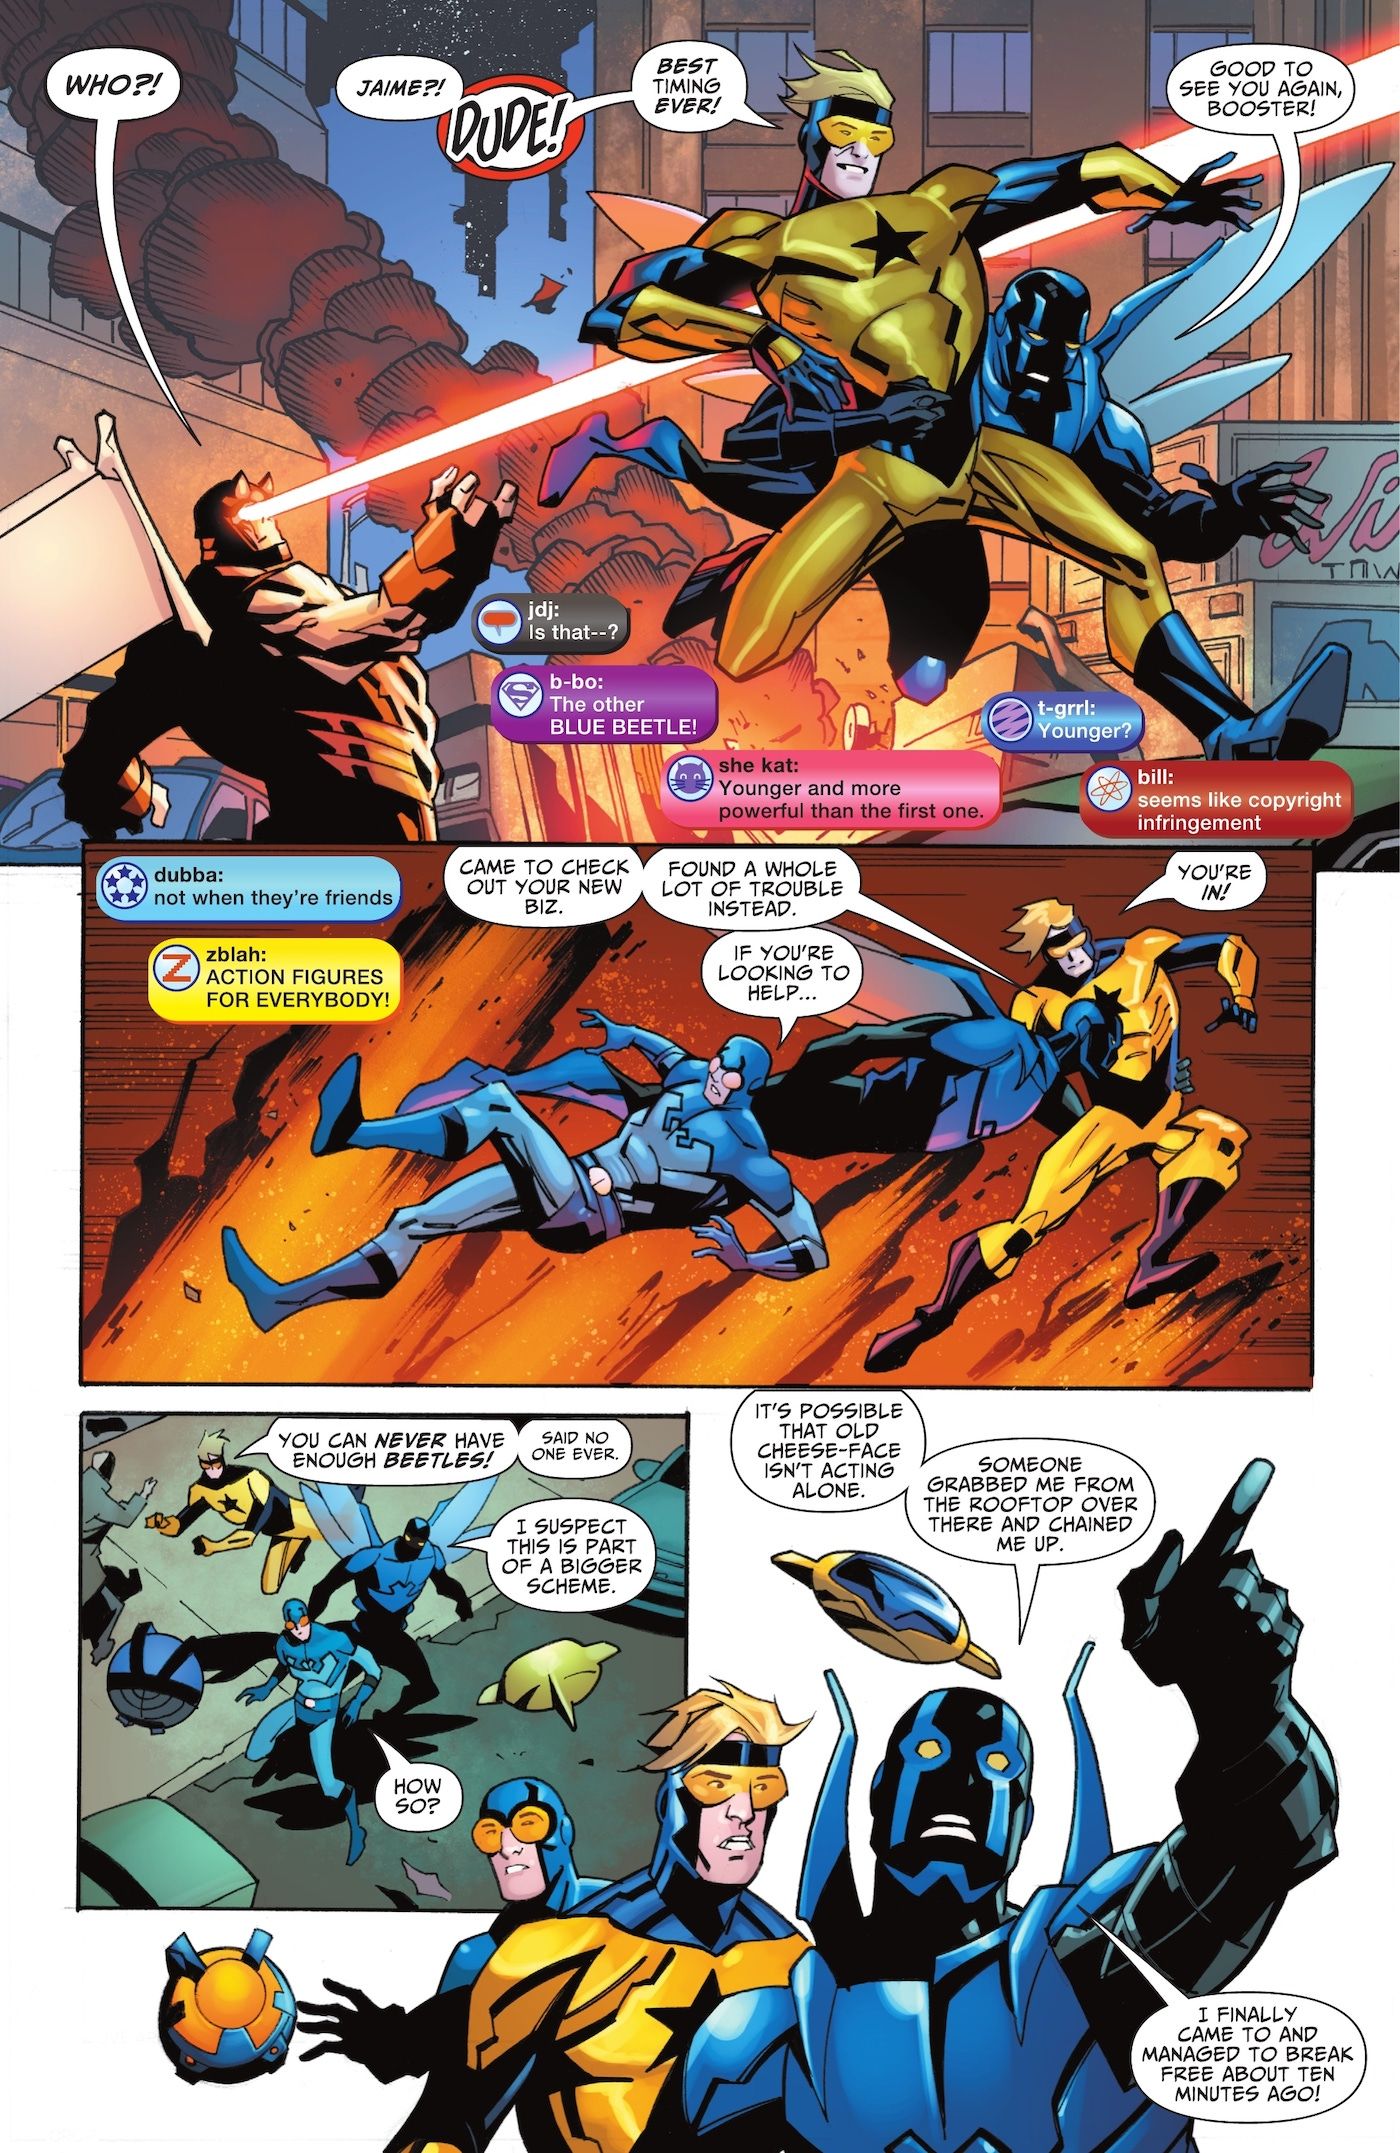 Blue Beetle Returns To DC Comics Before His DCEU Movie